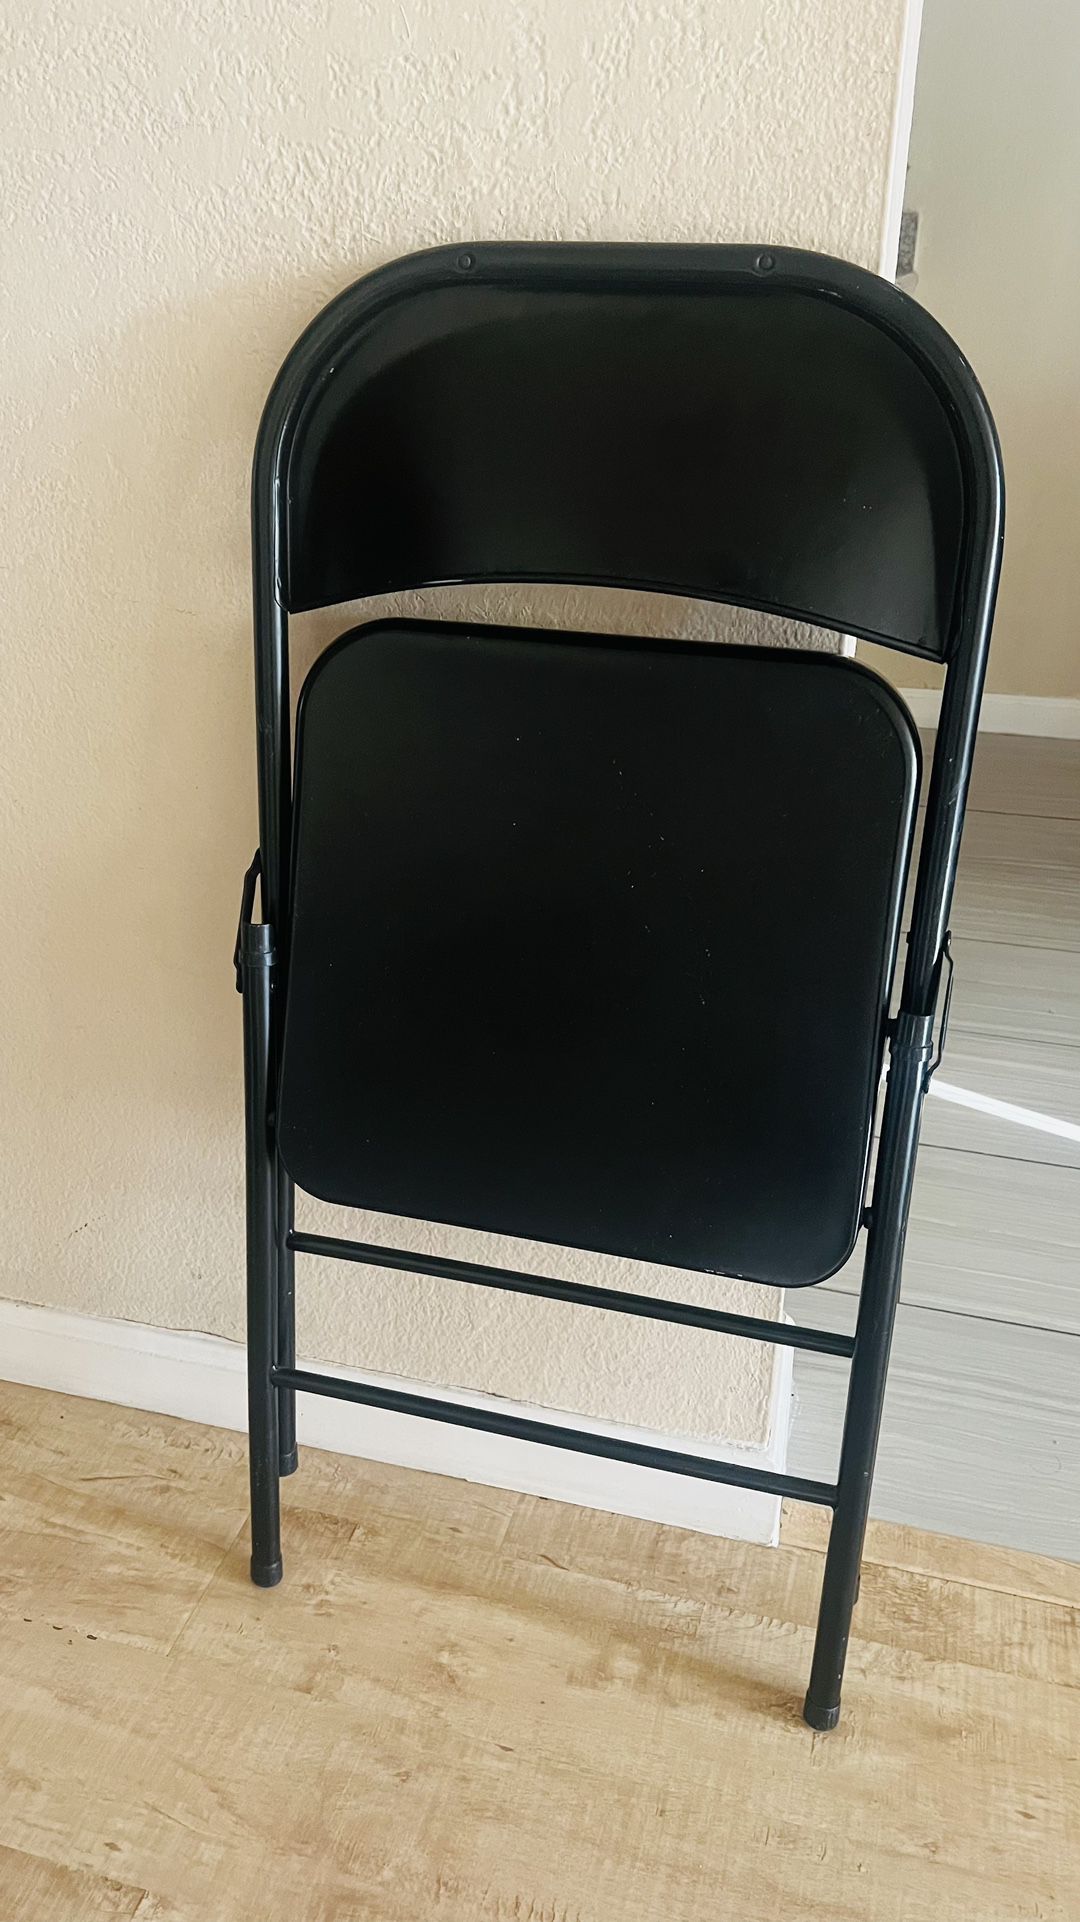 2 Black chairs